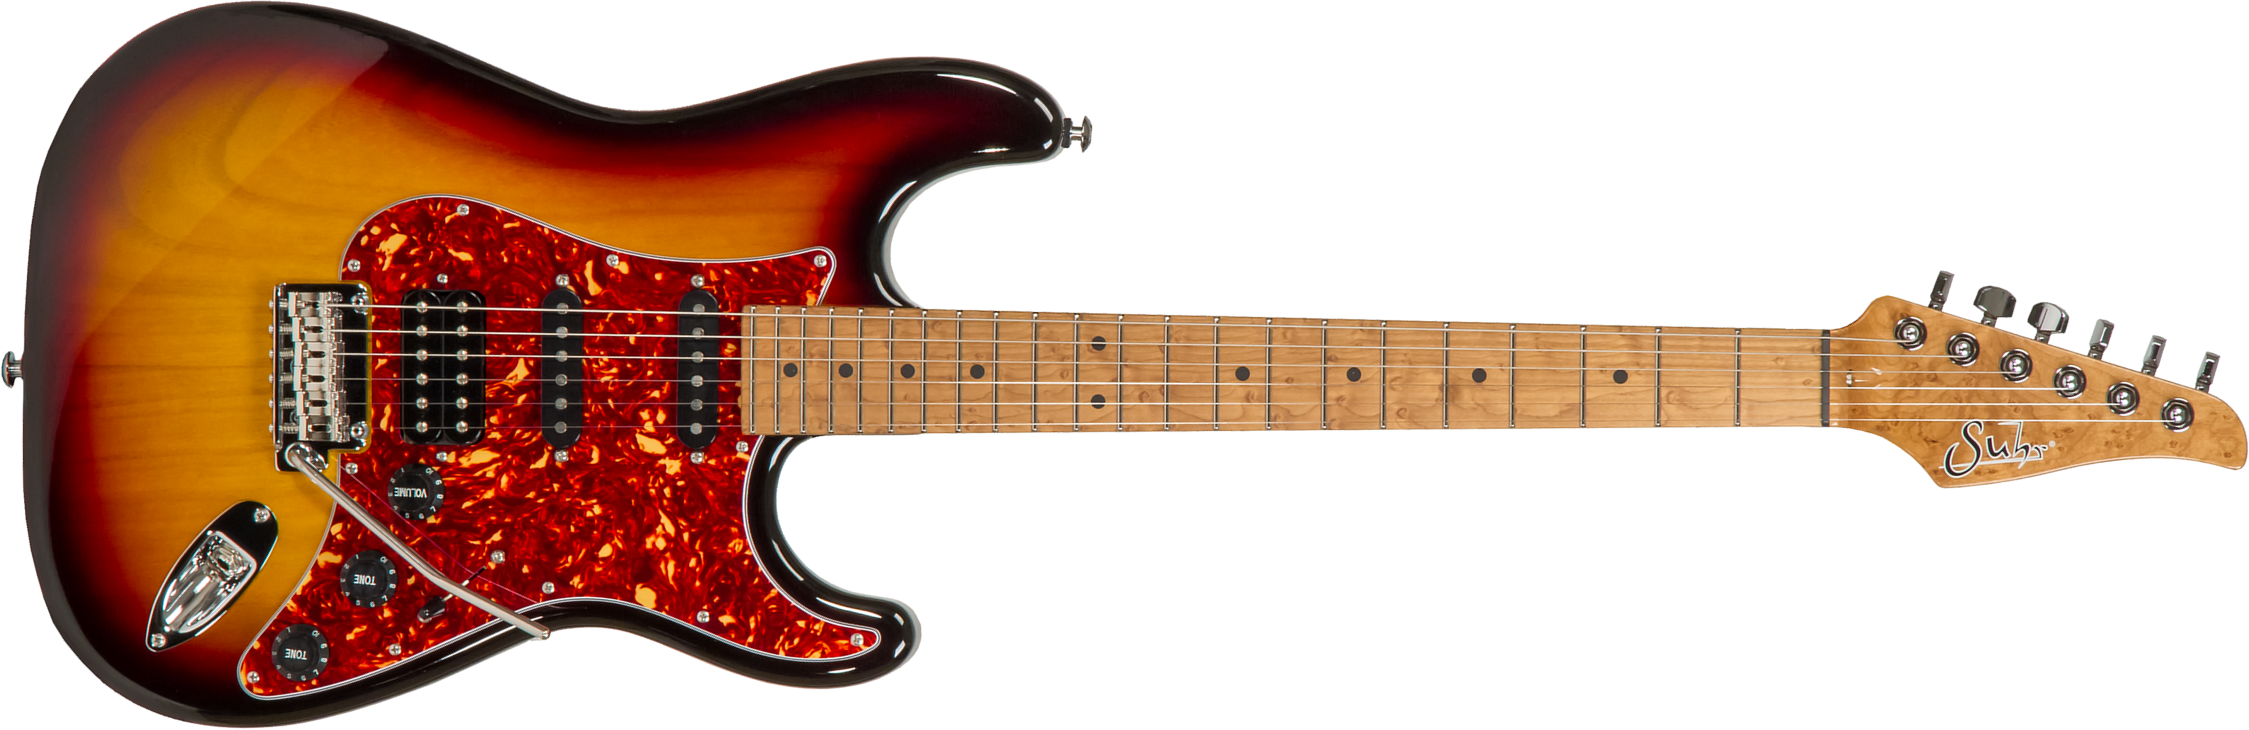 Suhr Classic S Paulownia 01-ltd-0021 Hss Trem Rw #70279 - 3-tone Burst - Str shape electric guitar - Main picture